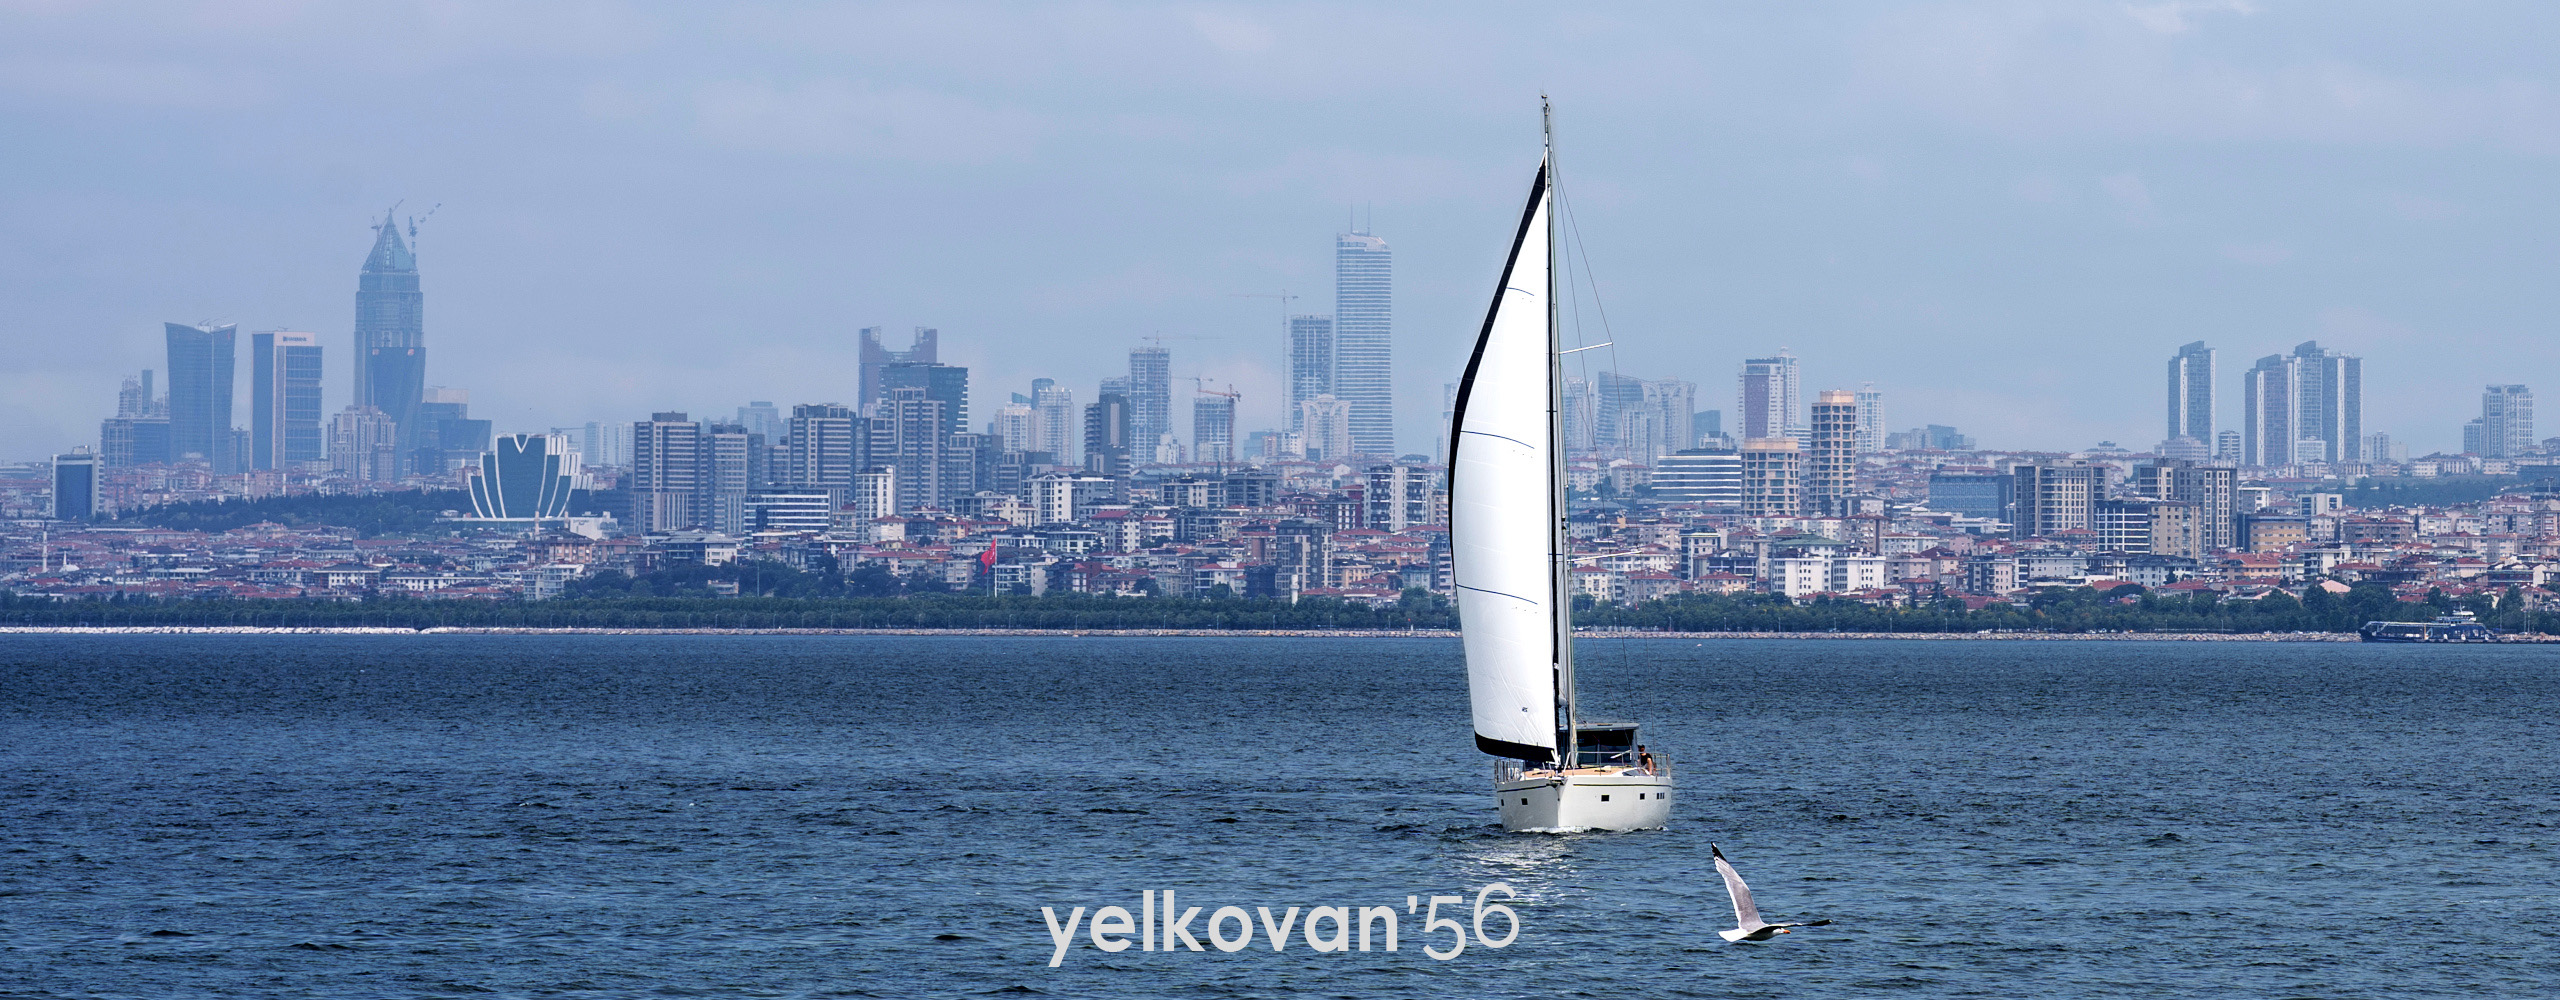 Yelkovan 56 Sailing